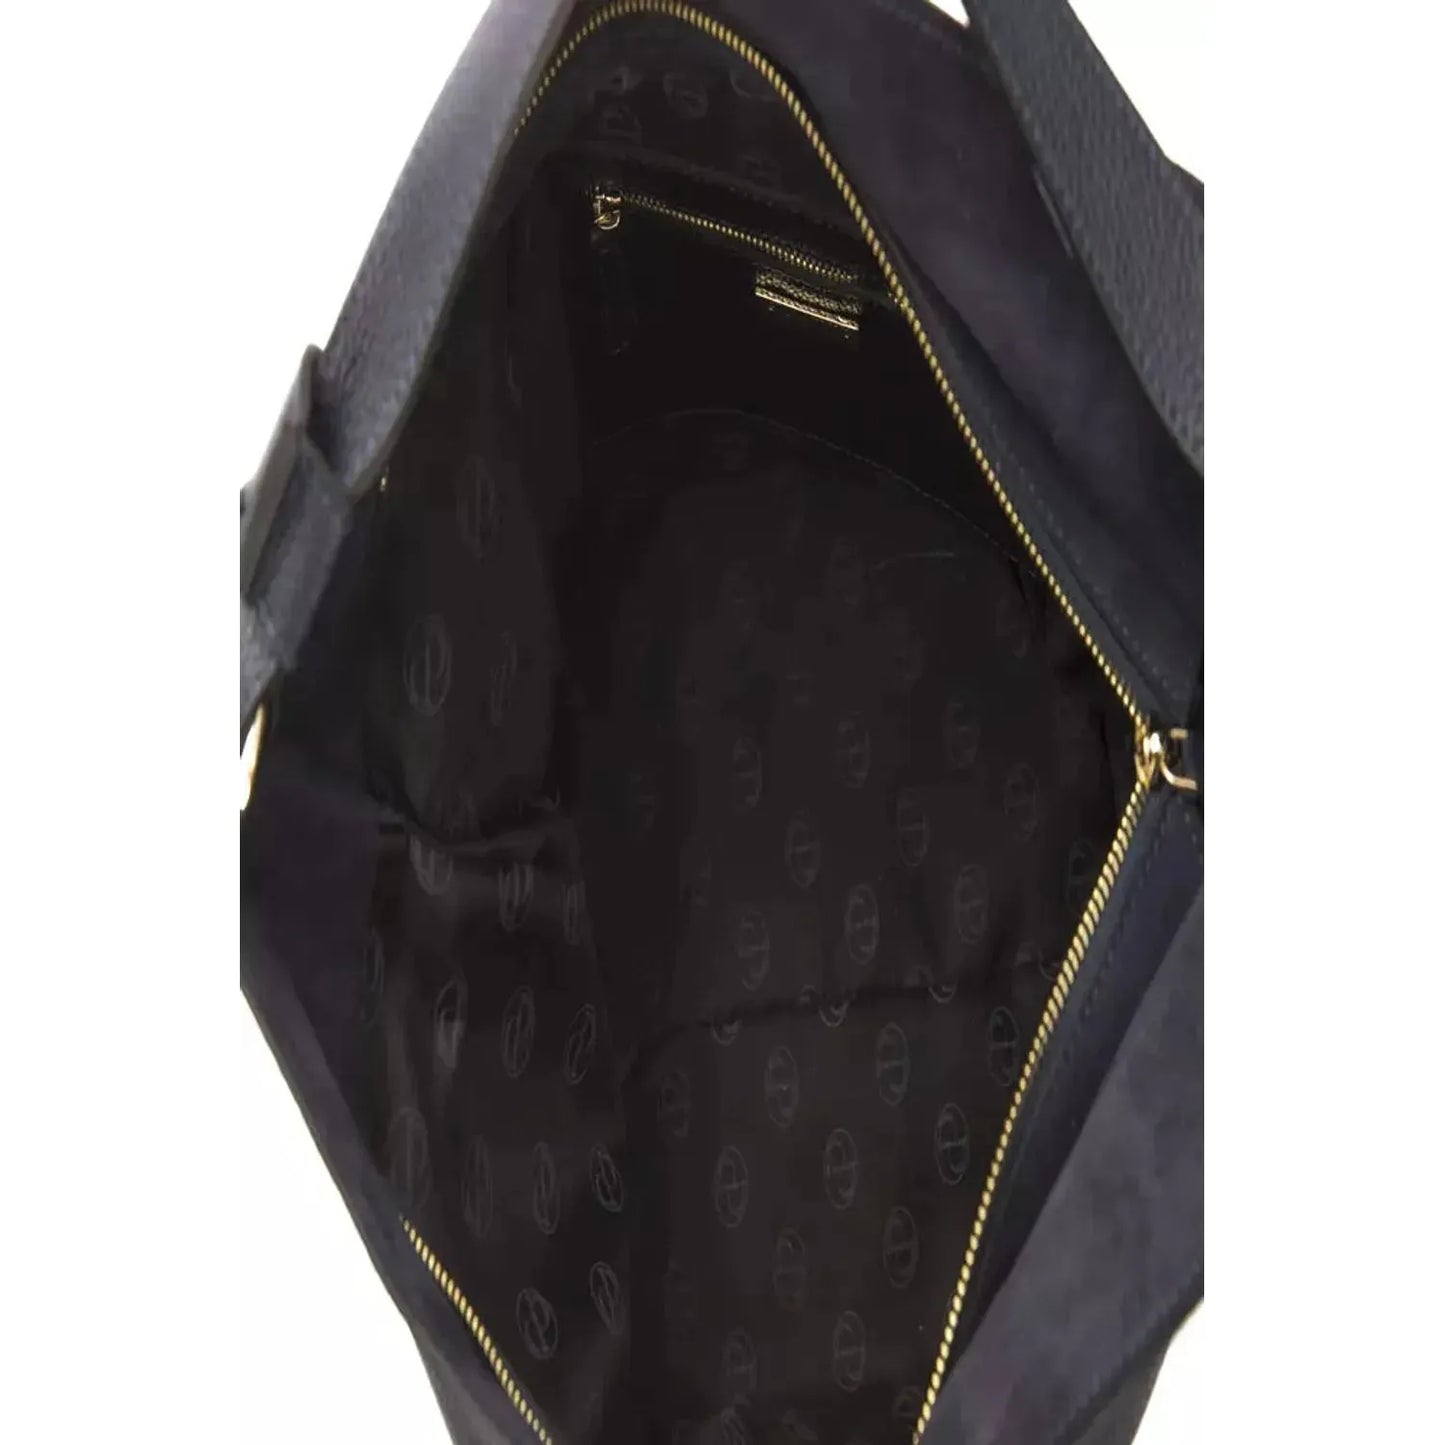 Pompei Donatella Chic Gray Leather Shoulder Bag with Logo Detailing WOMAN SHOULDER BAGS gray-leather-shoulder-bag